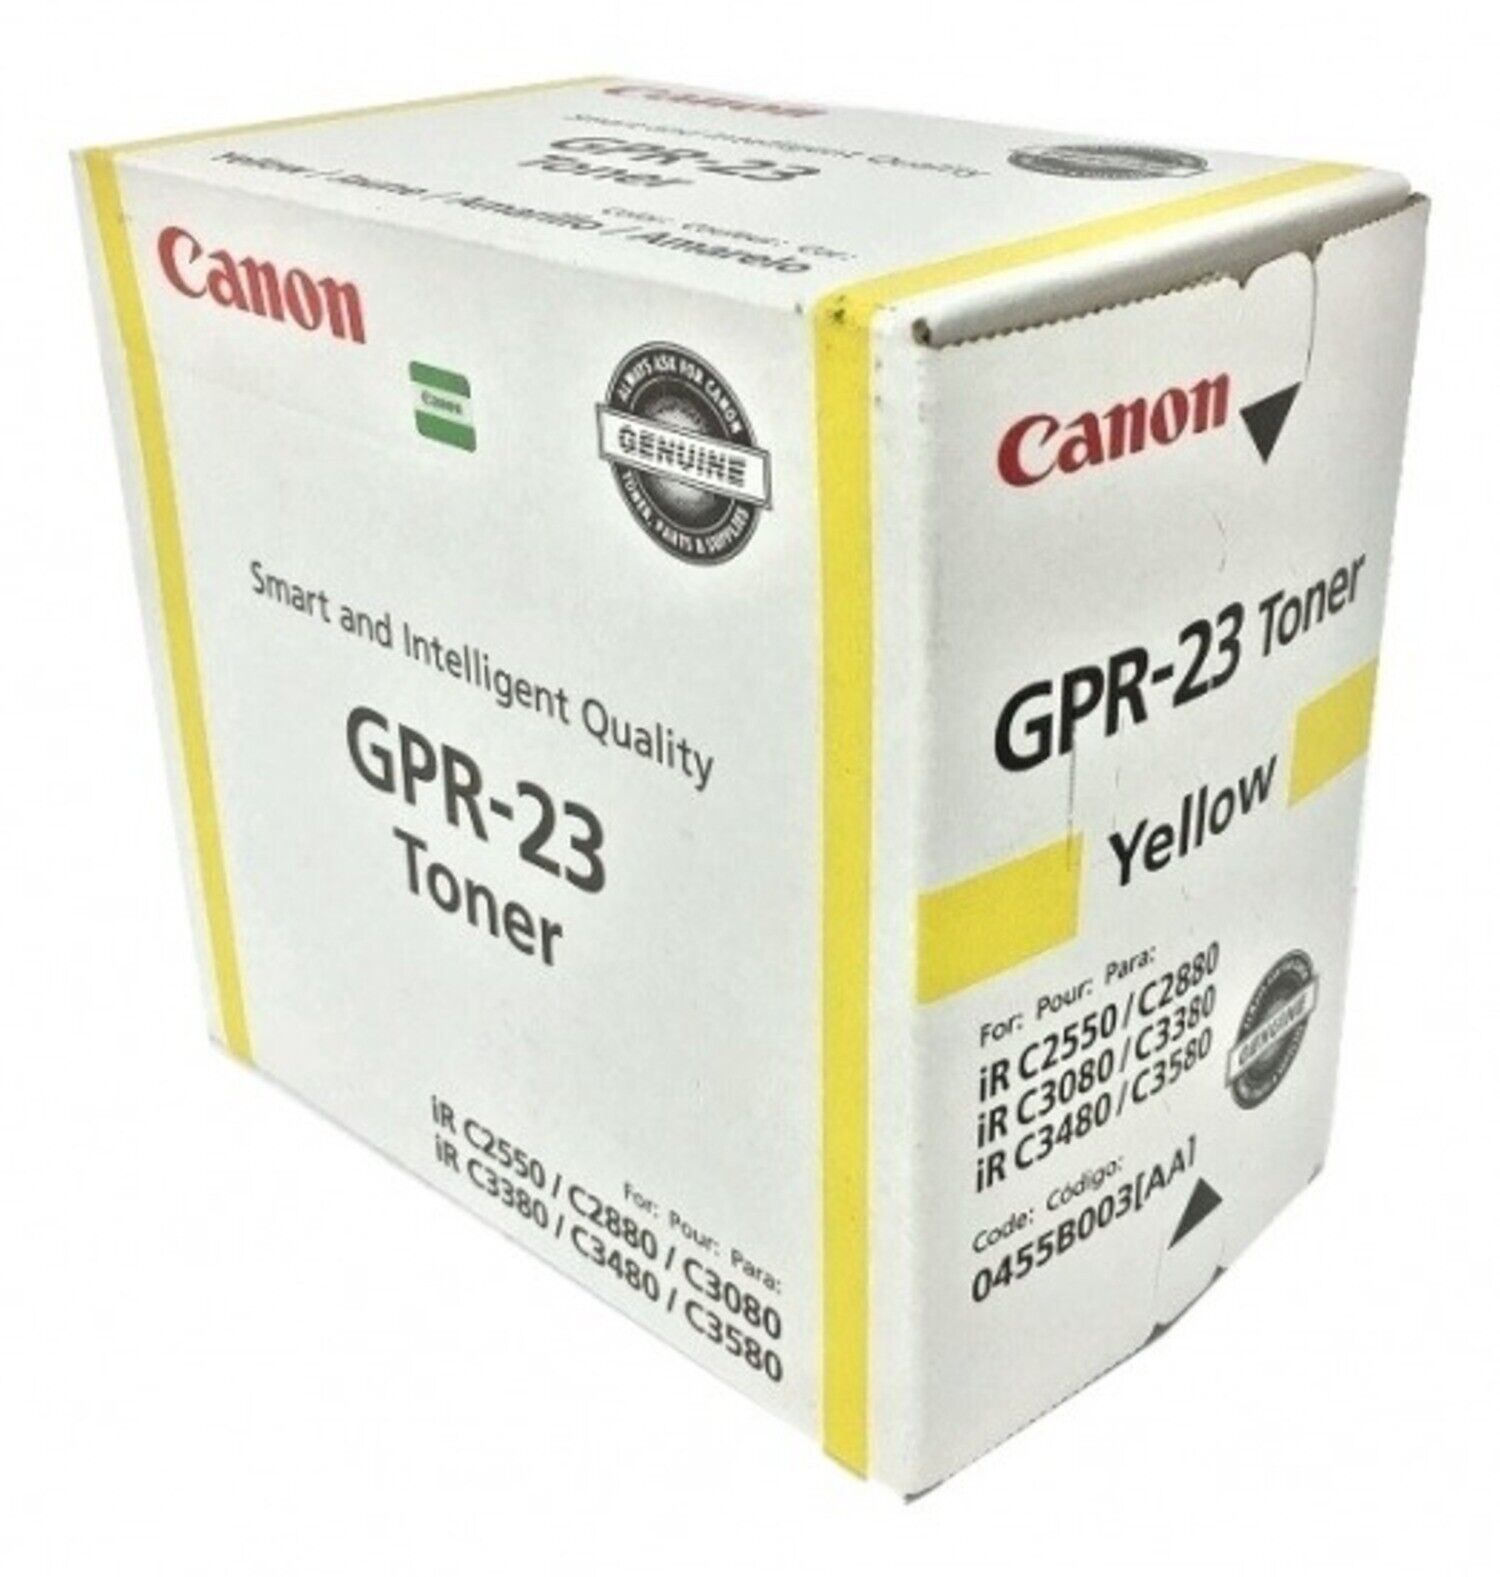 Genuine Canon GPR-23 Yellow Toner